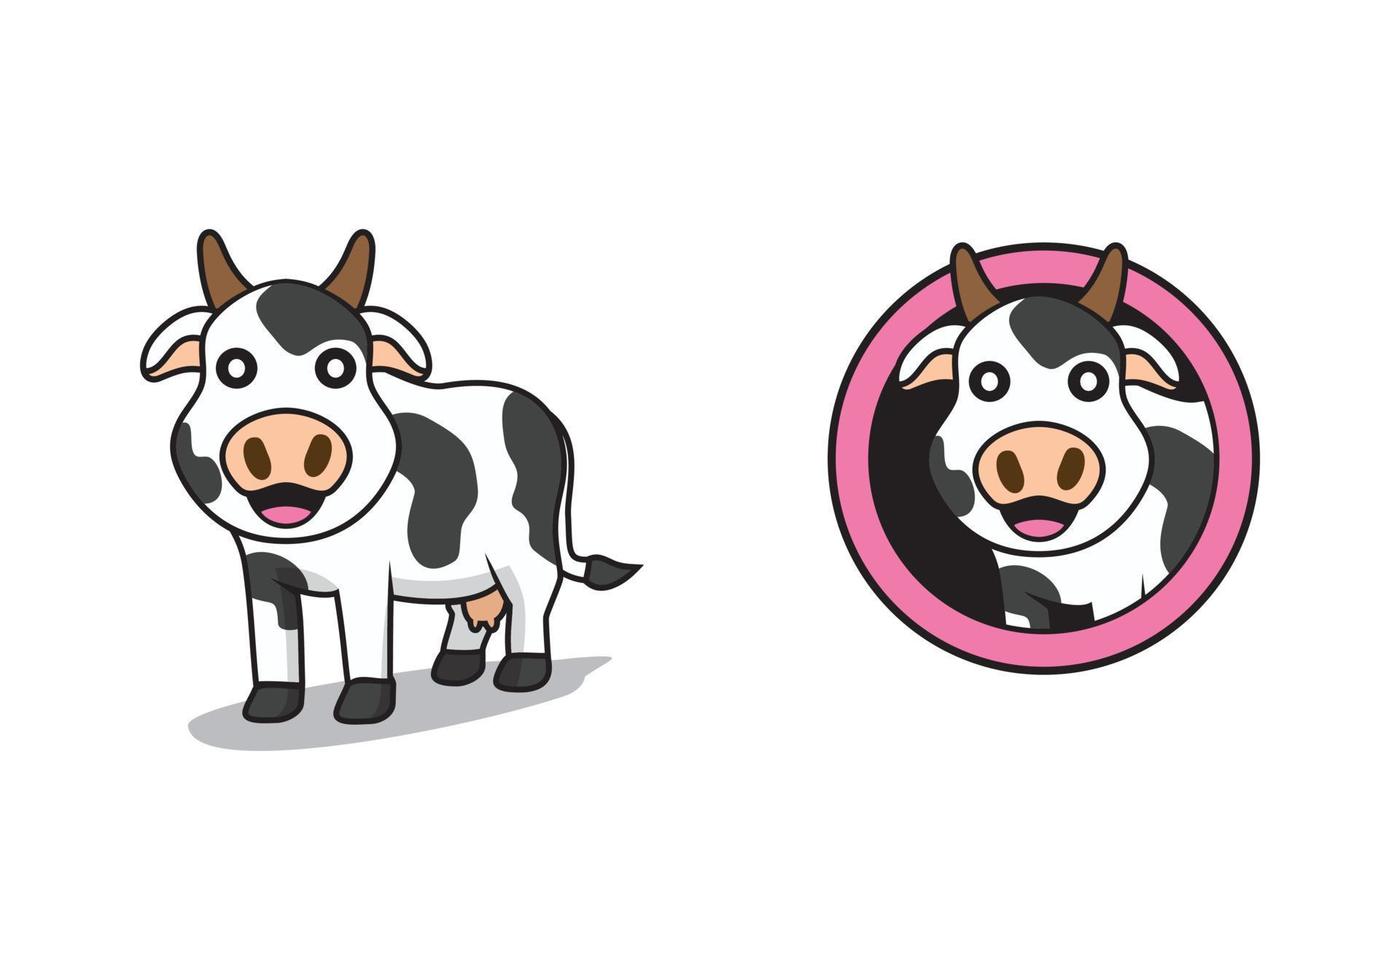 Cute cow cartoon character design illustration vector